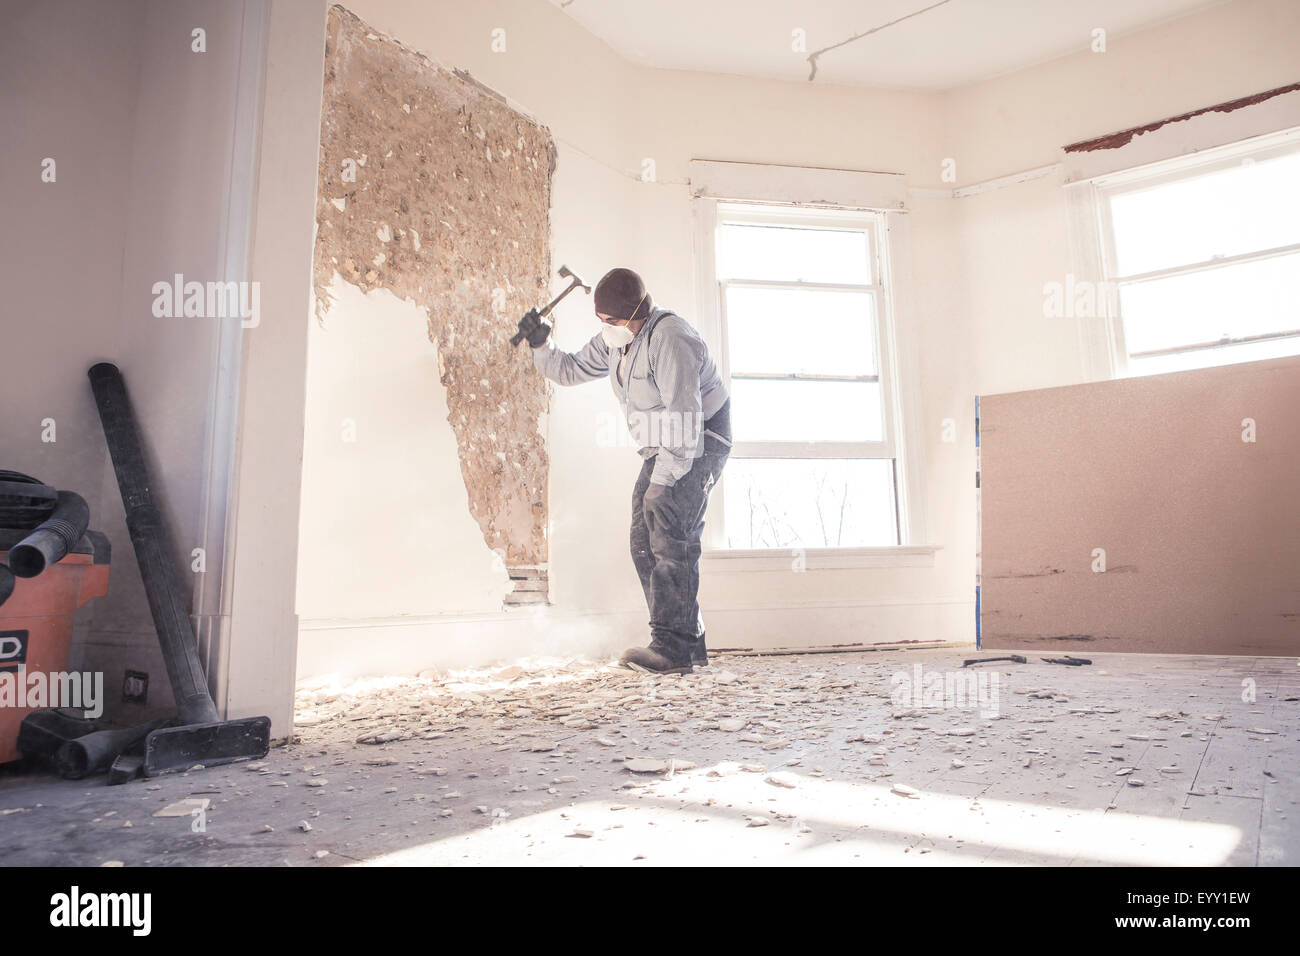 Hispanic construction worker demolishing wall Stock Photo